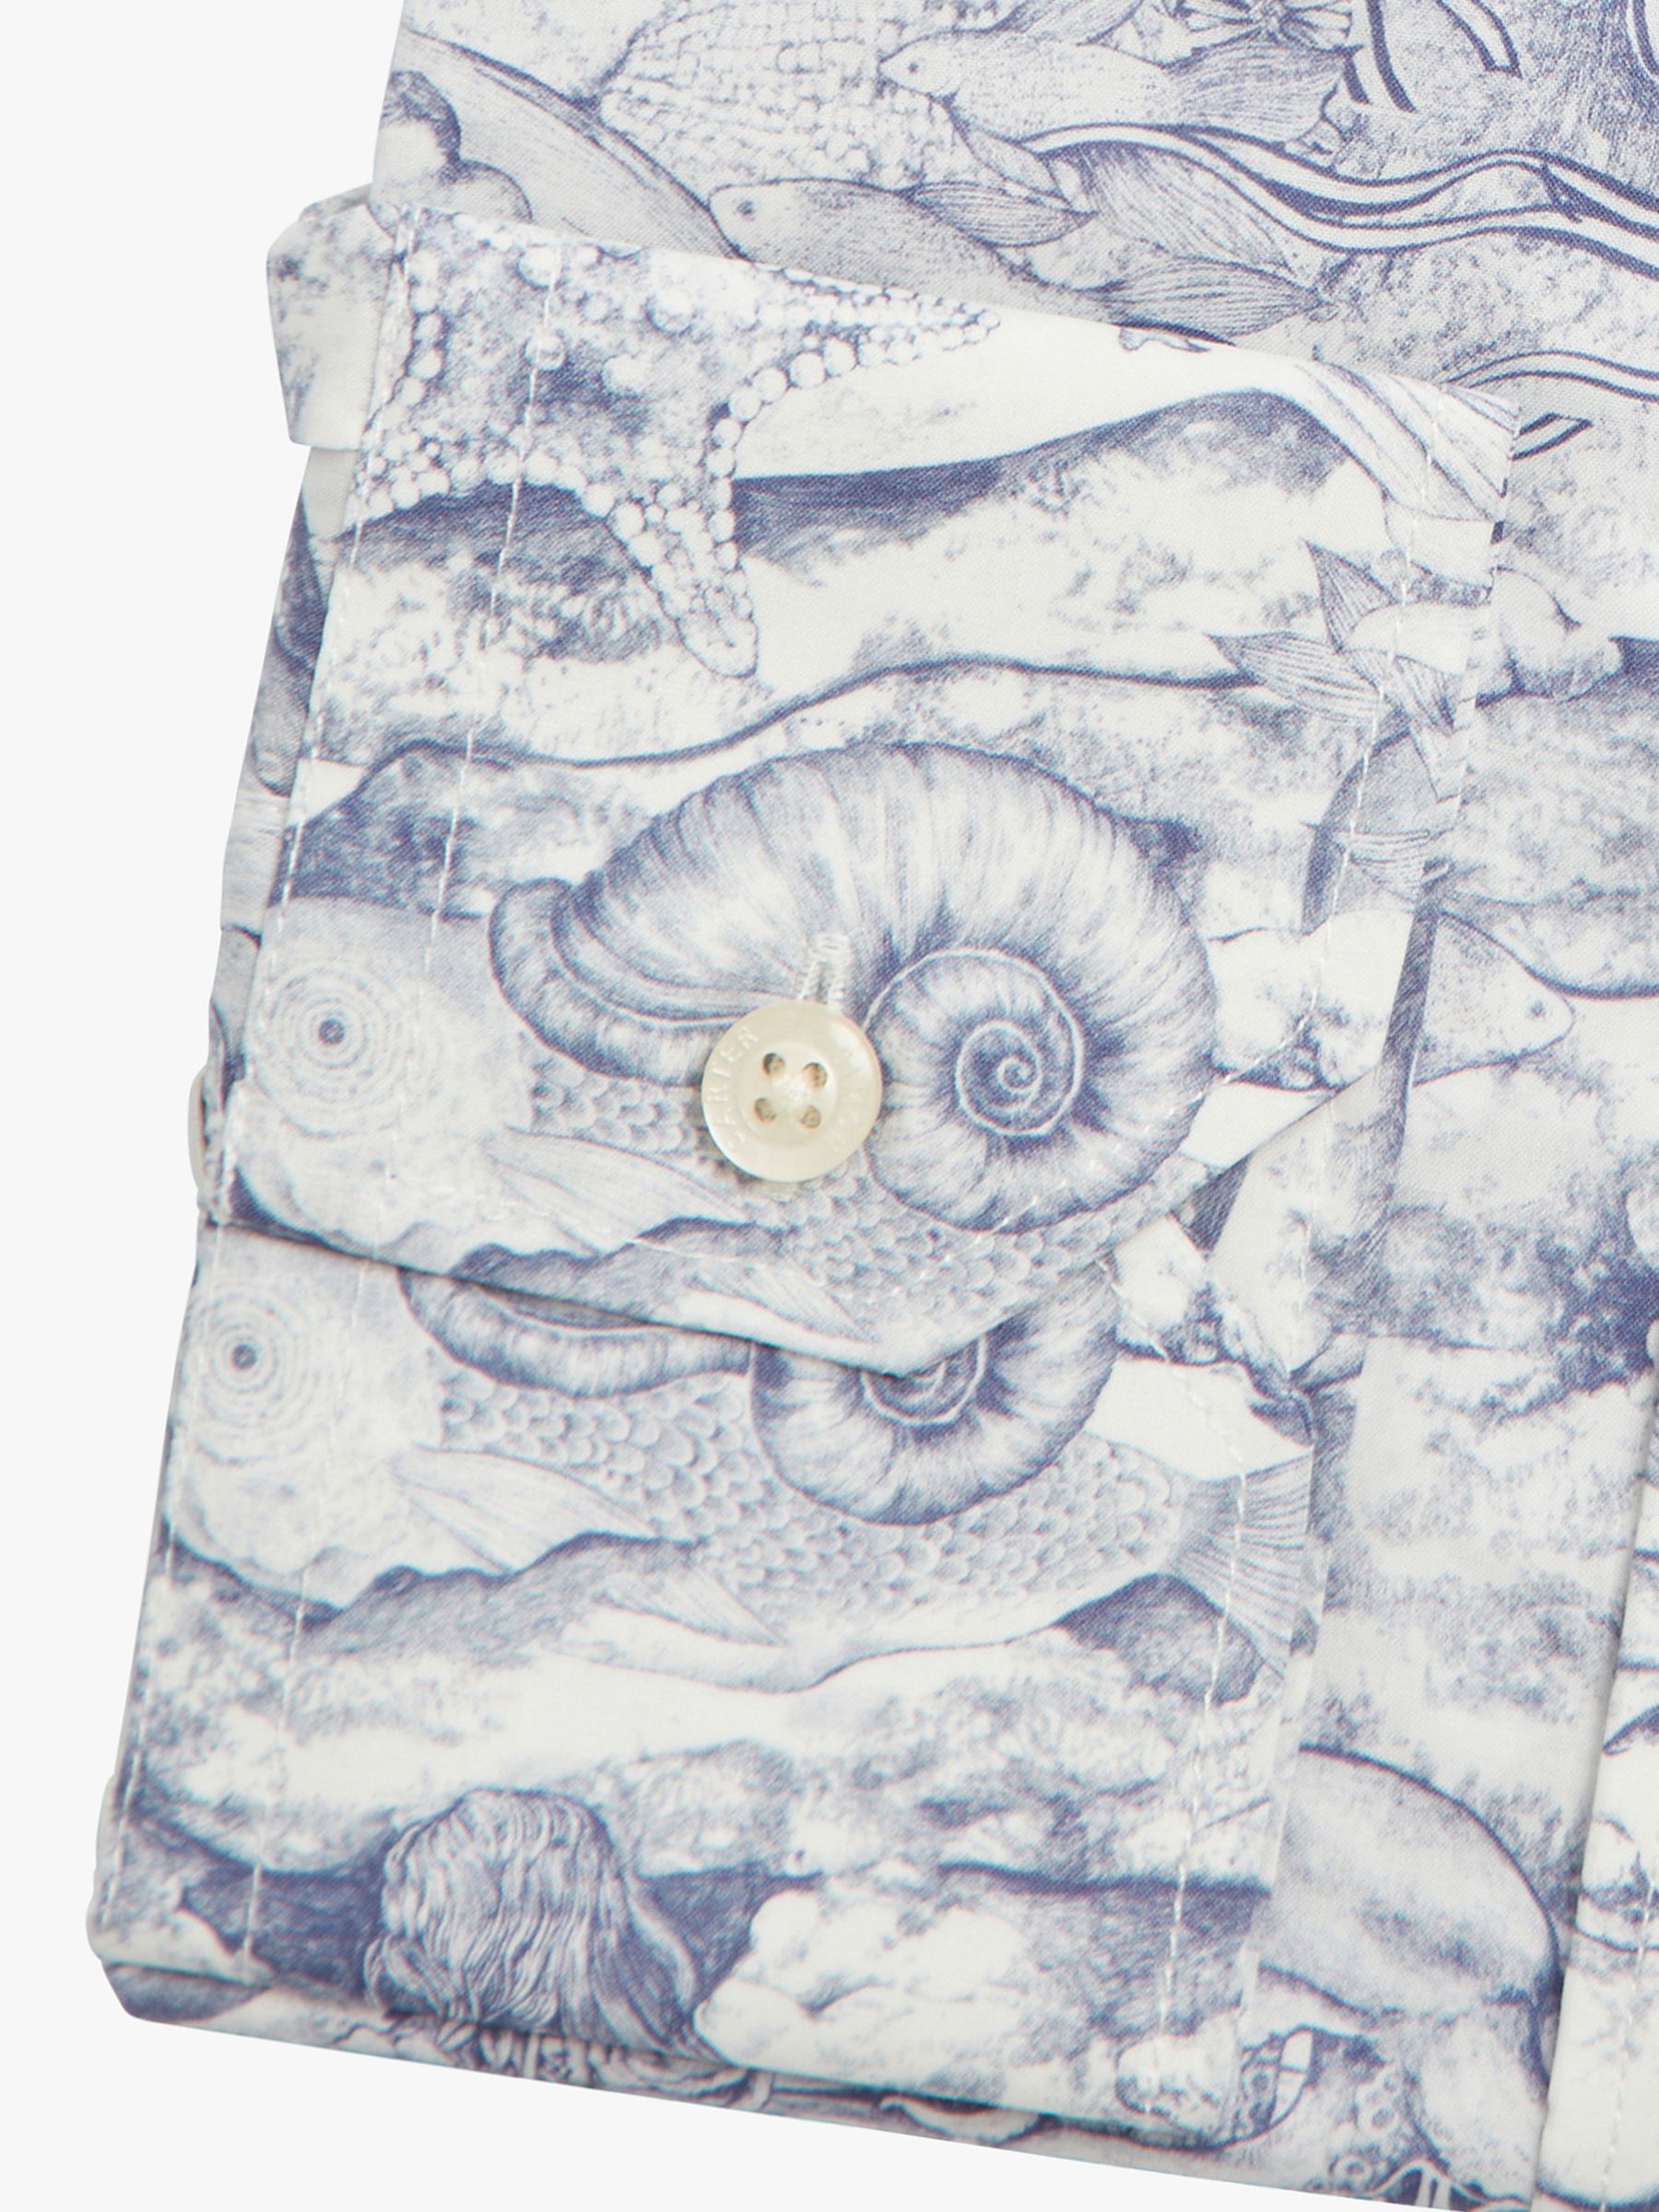 Buy Simon Carter Sea Spirit Long Sleeve Shirt, White/Blue Online at johnlewis.com